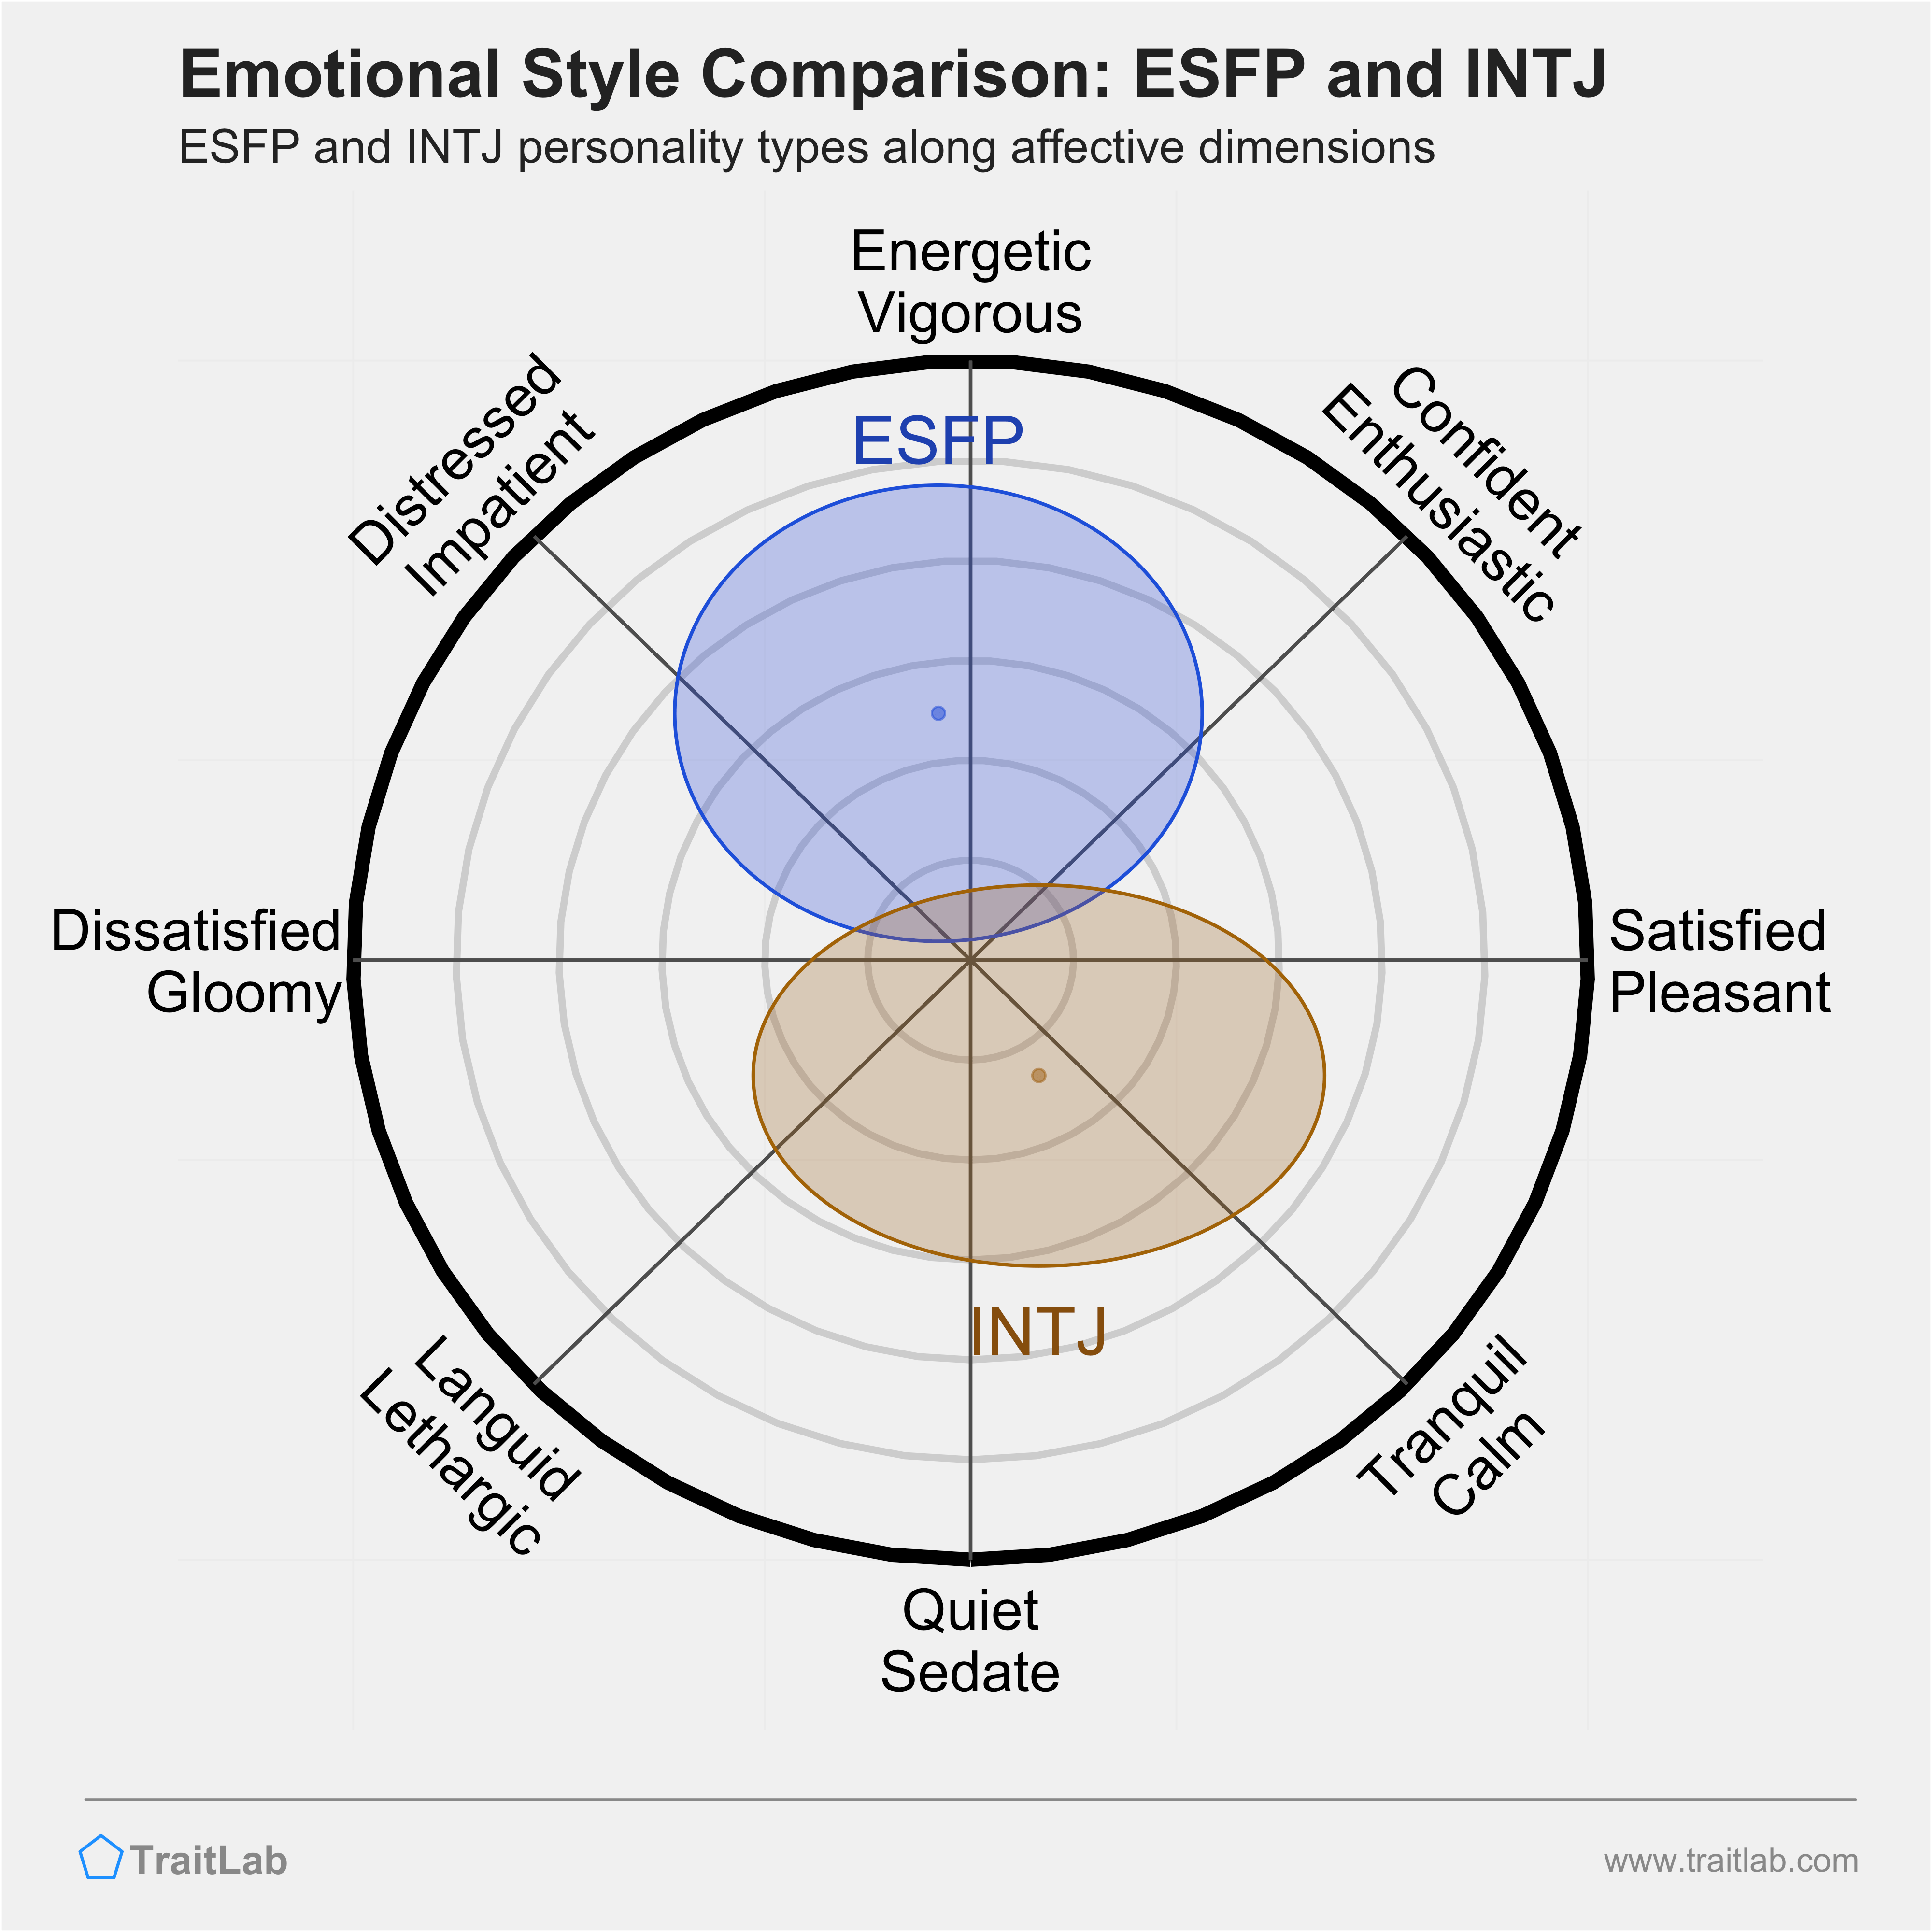 ESFP and INTJ comparison across emotional (affective) dimensions